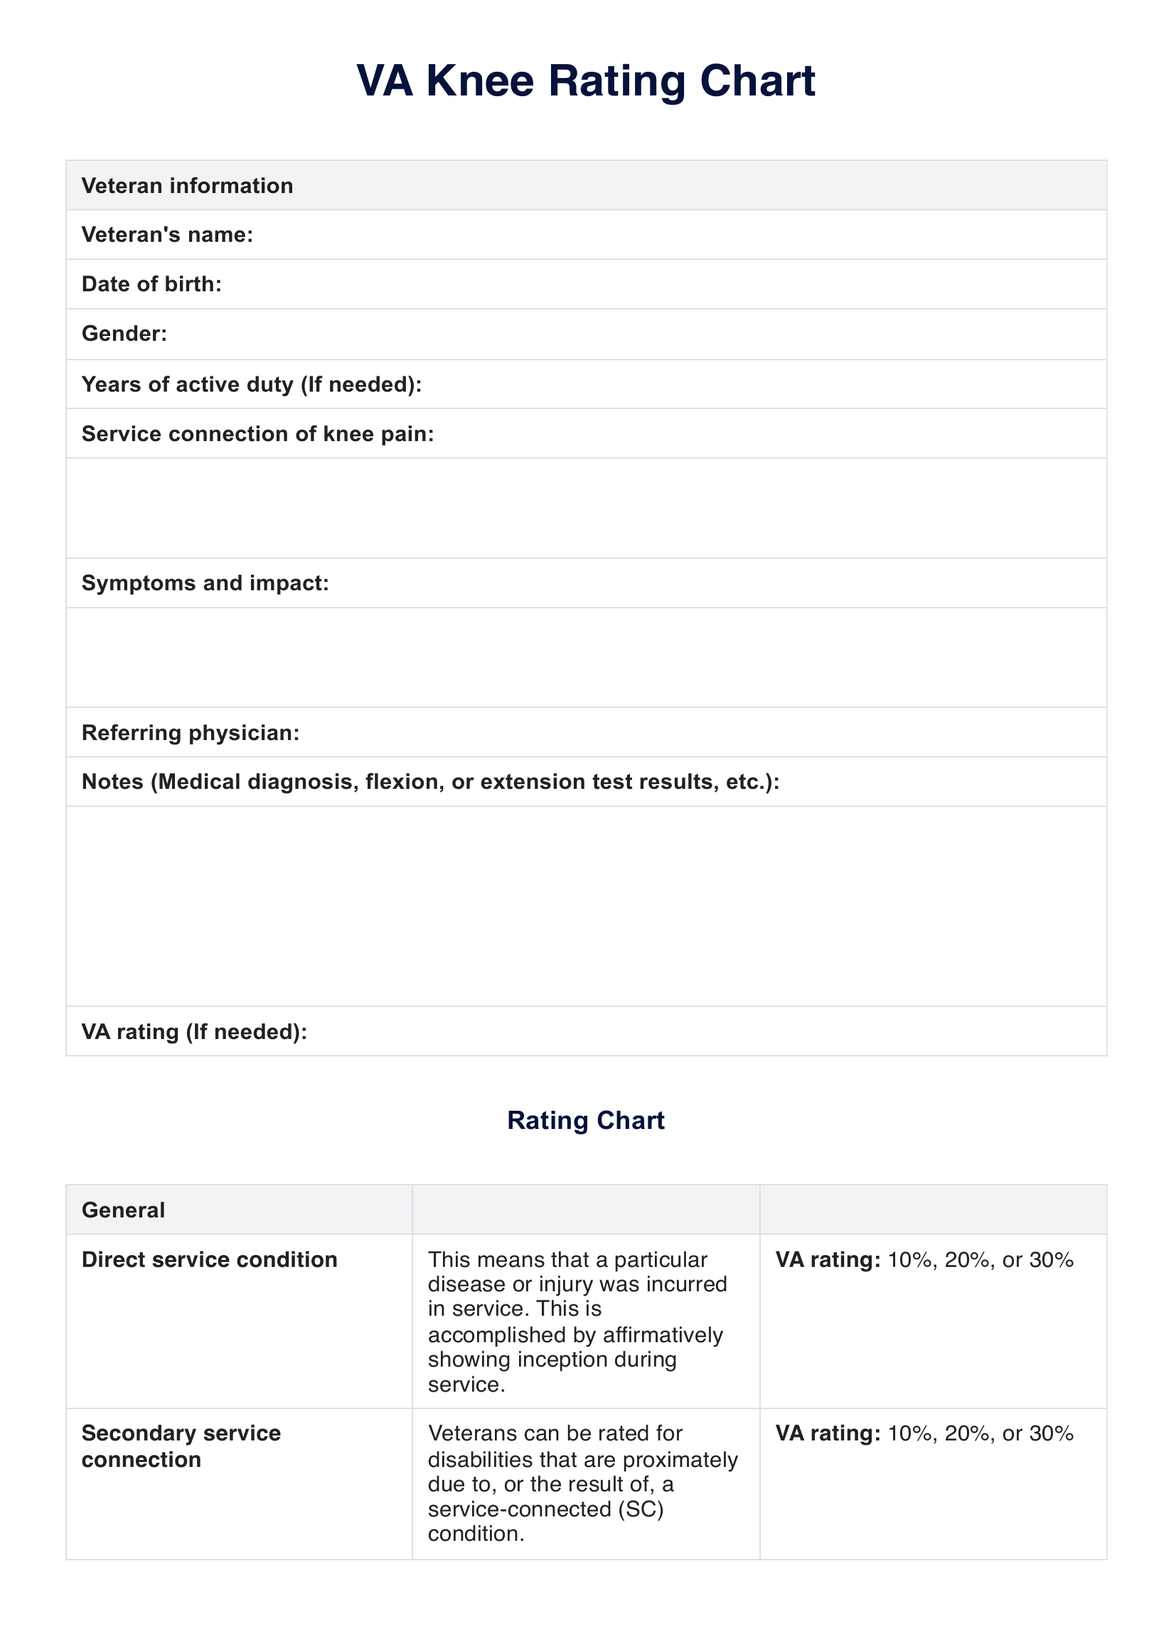 VA Knee Rating Chart PDF Example